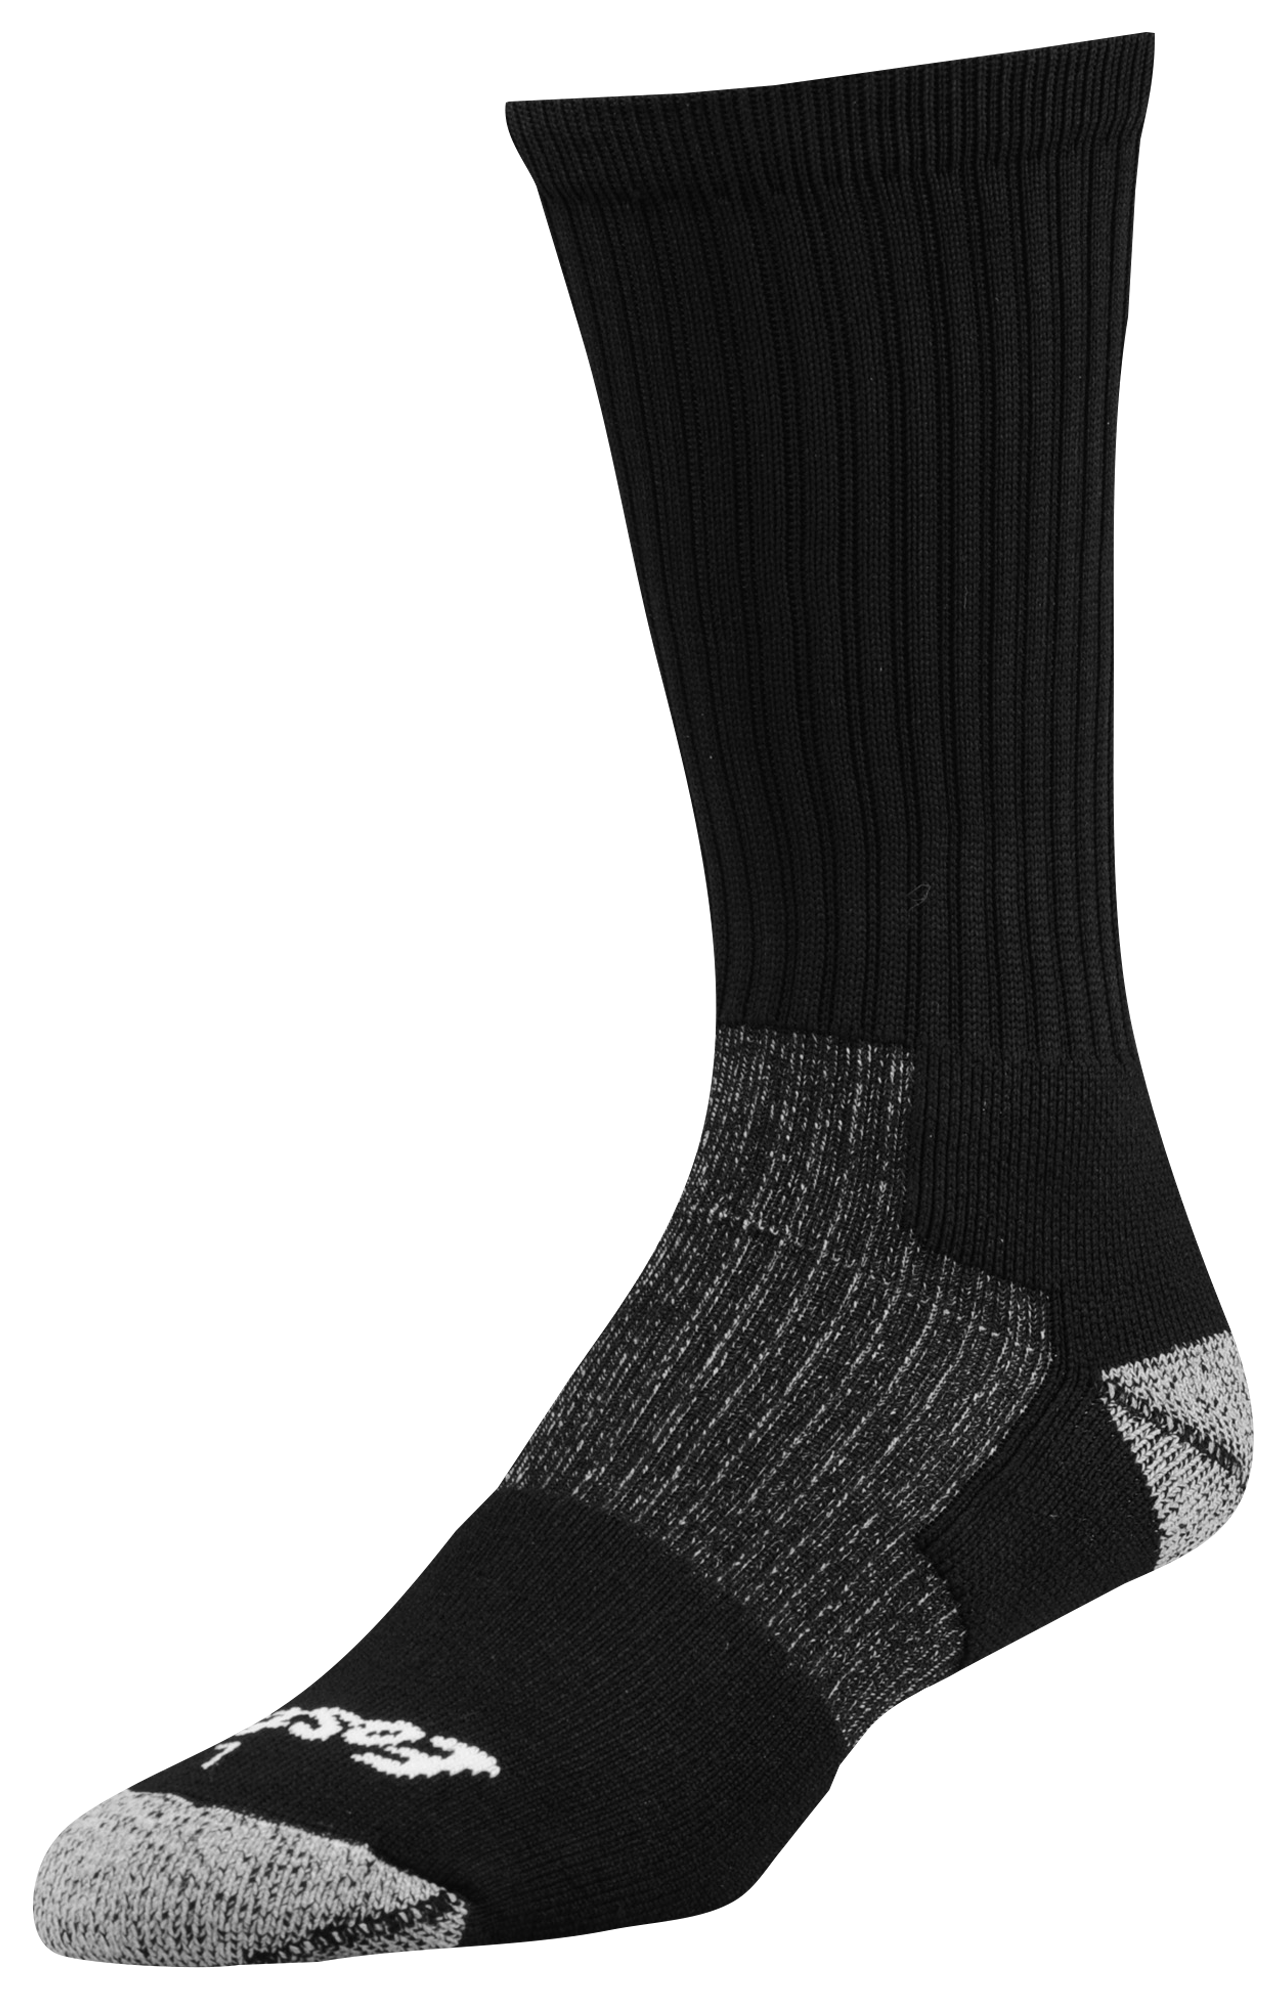 eastbay basketball socks